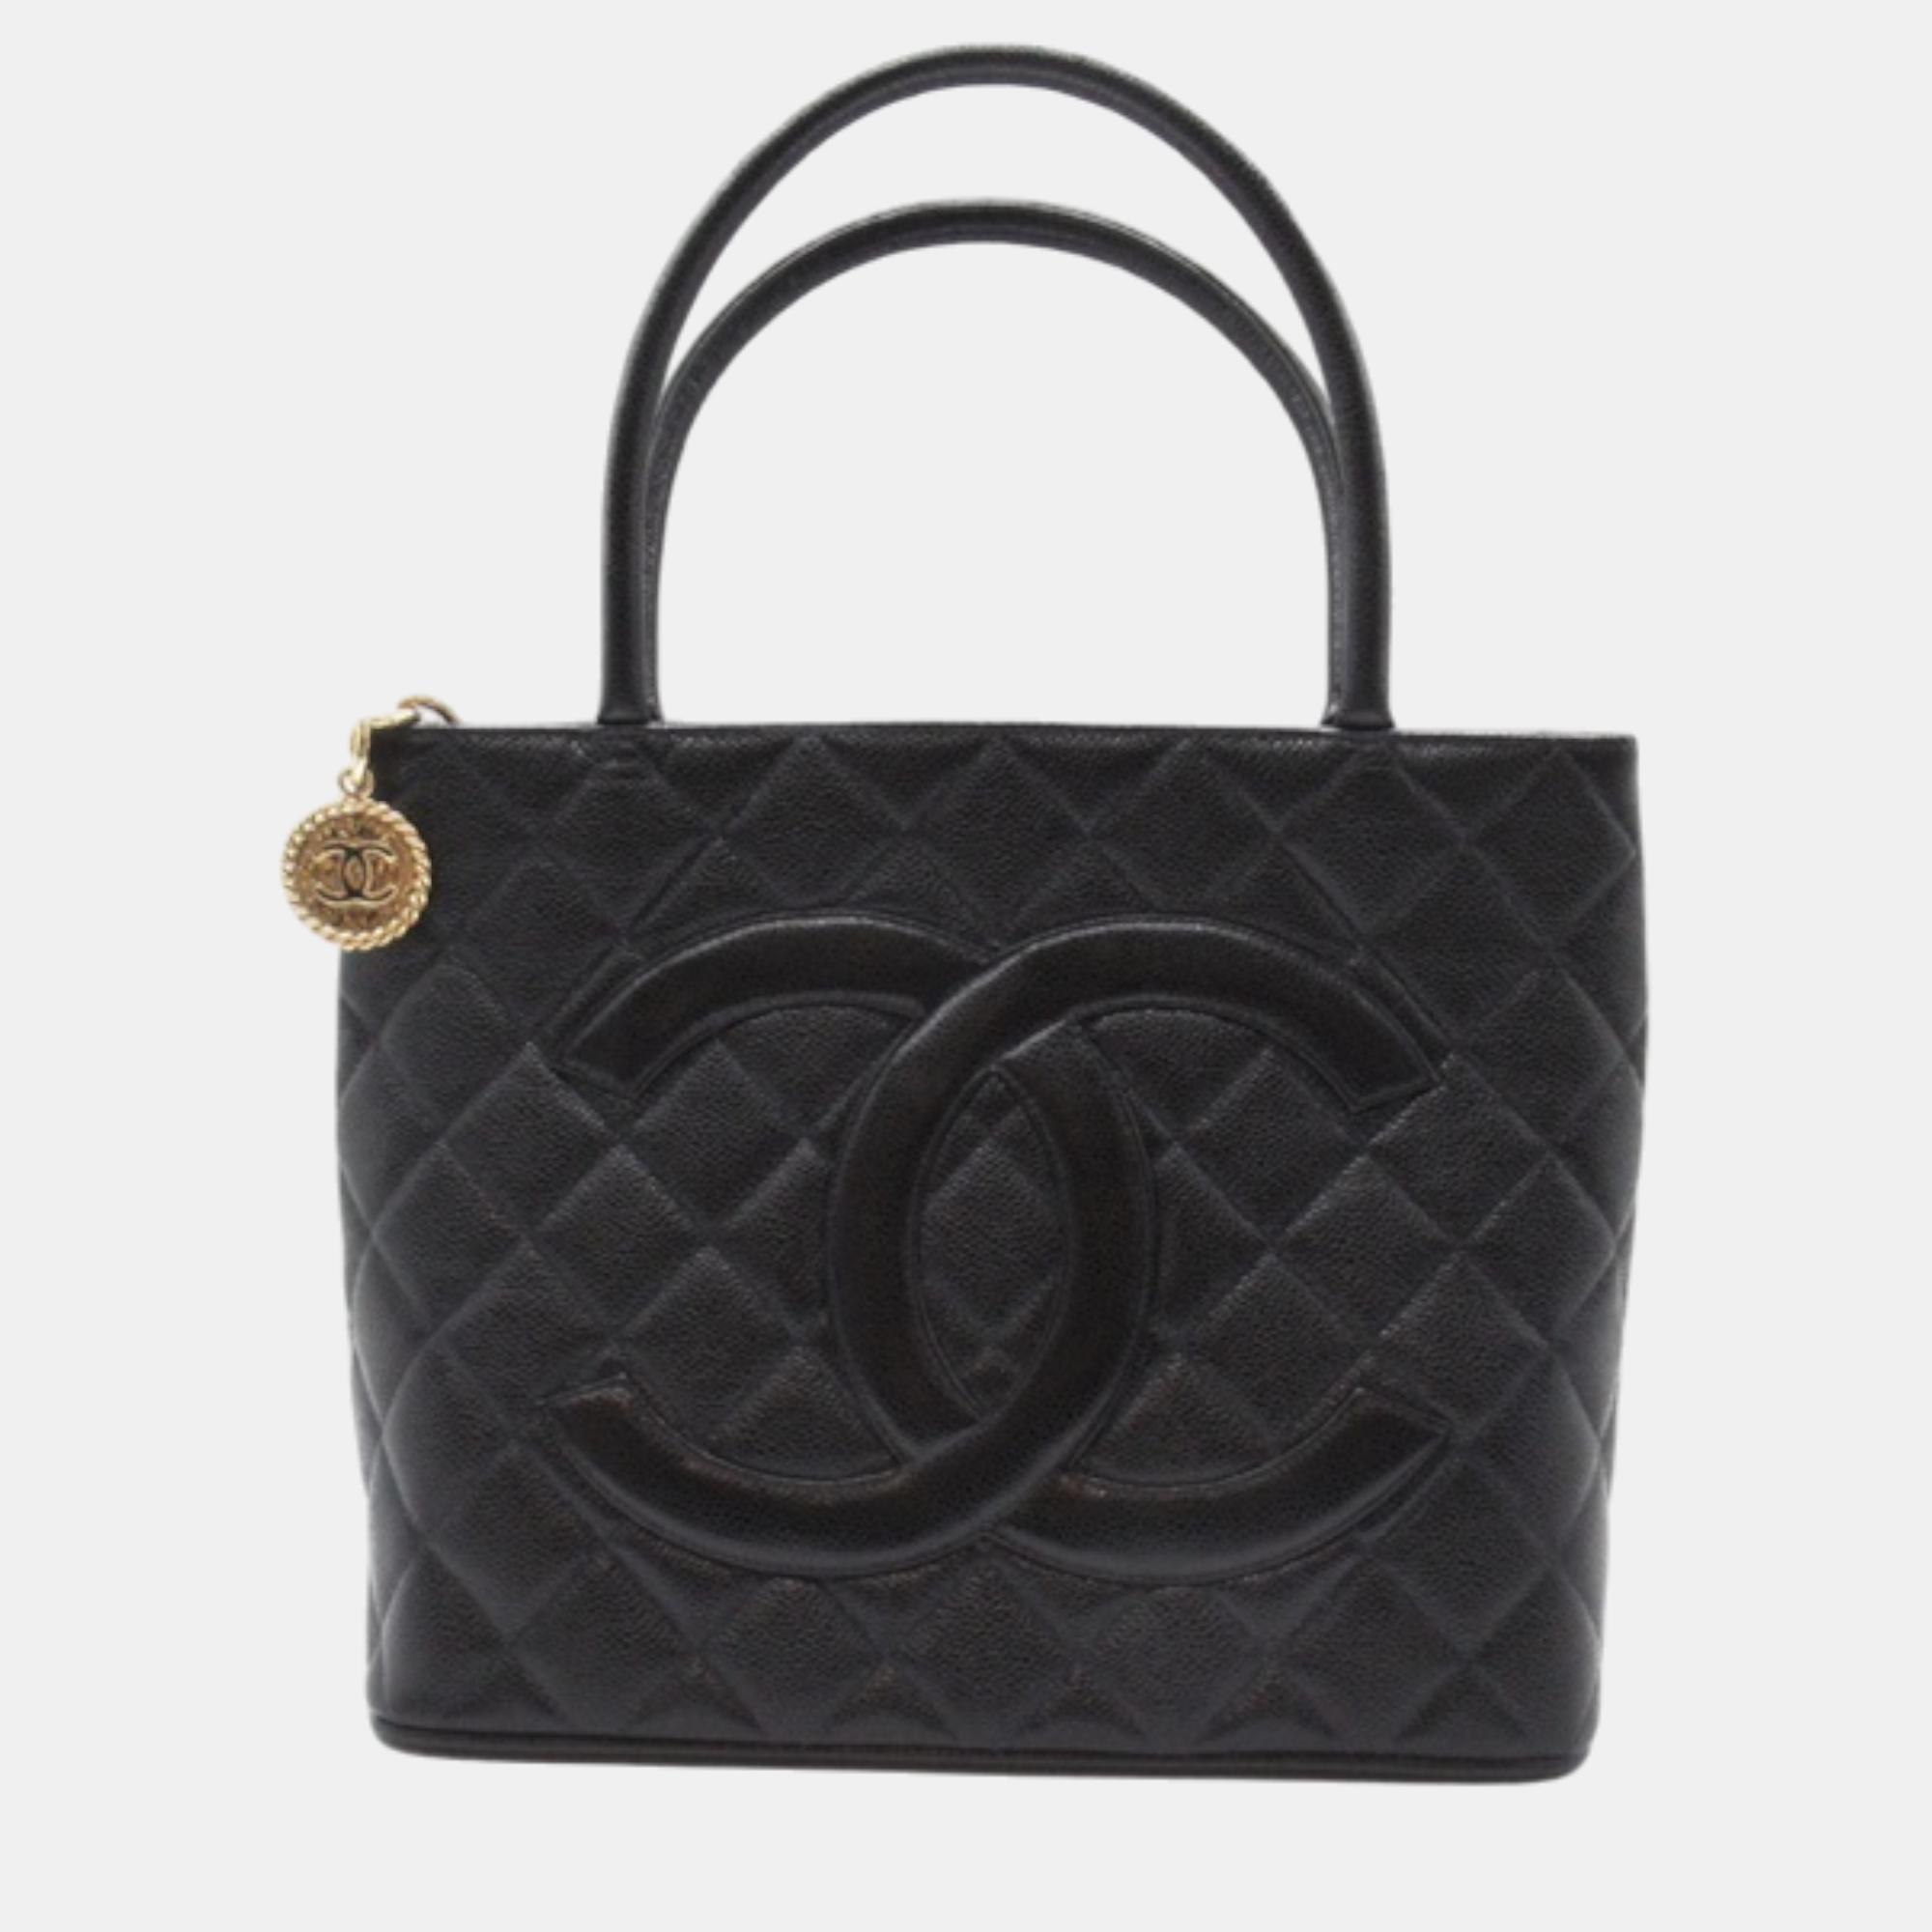 

Chanel Black Leather CC Caviar Medallion Tote Bag